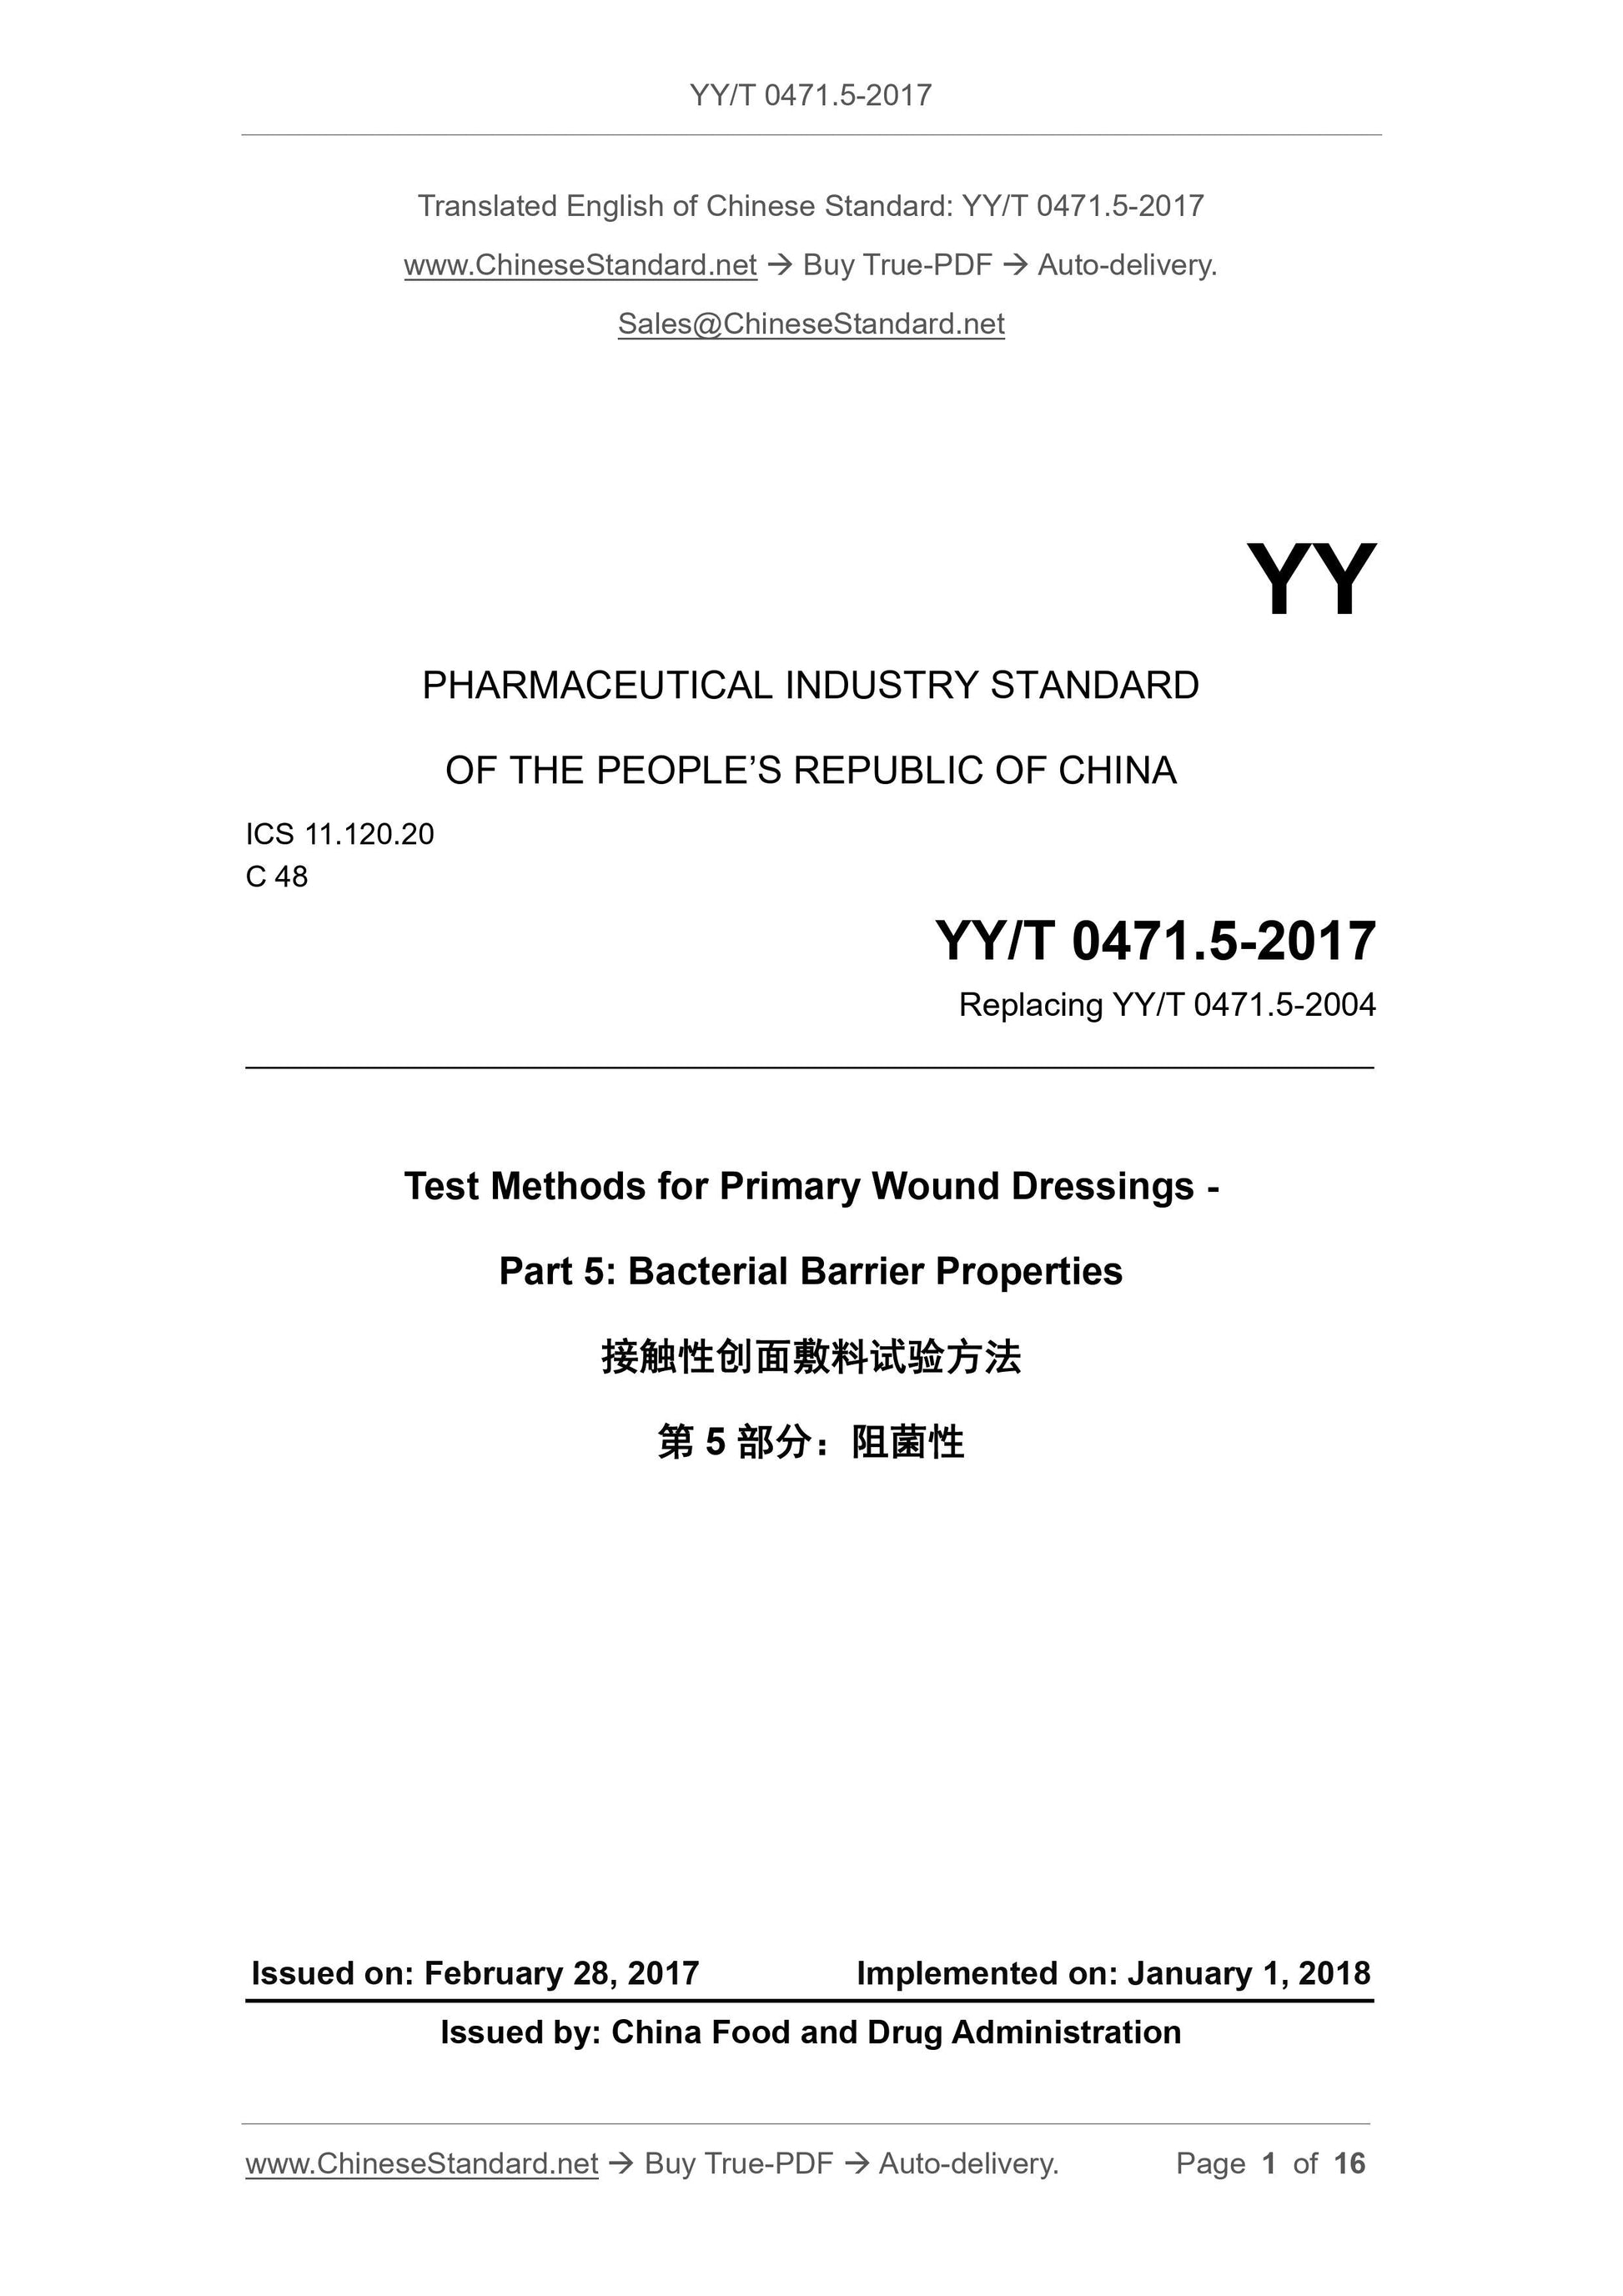 YY/T 0471.5-2017 Page 1